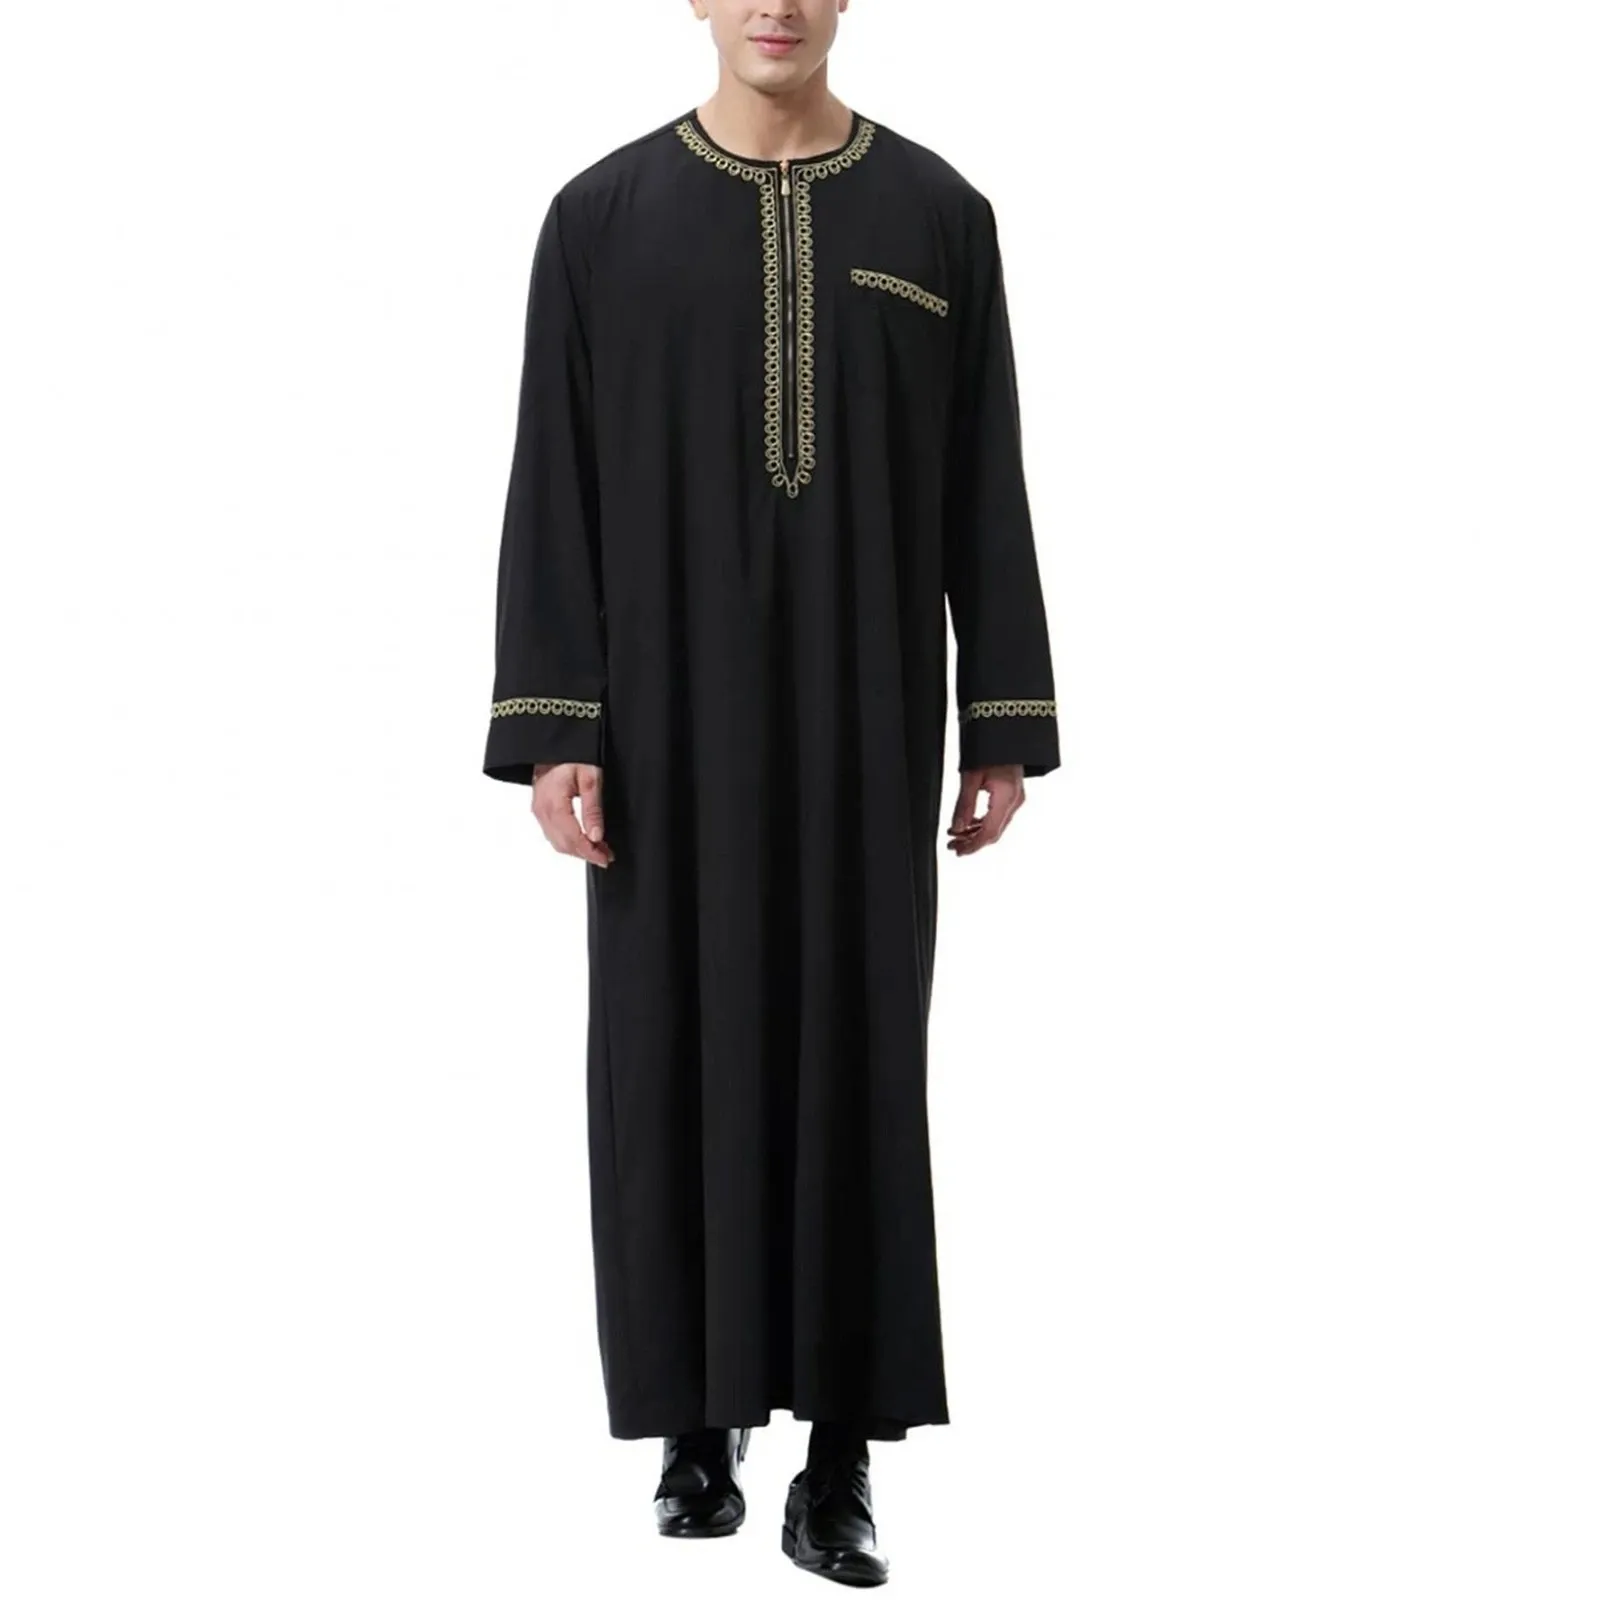 Arabic Pakistan Dubai Kaftan Abaya Robes Islamic Clothing Saudi Arabia Black Long Blouse Dress Muslim Fashion Men Jubba Thobes